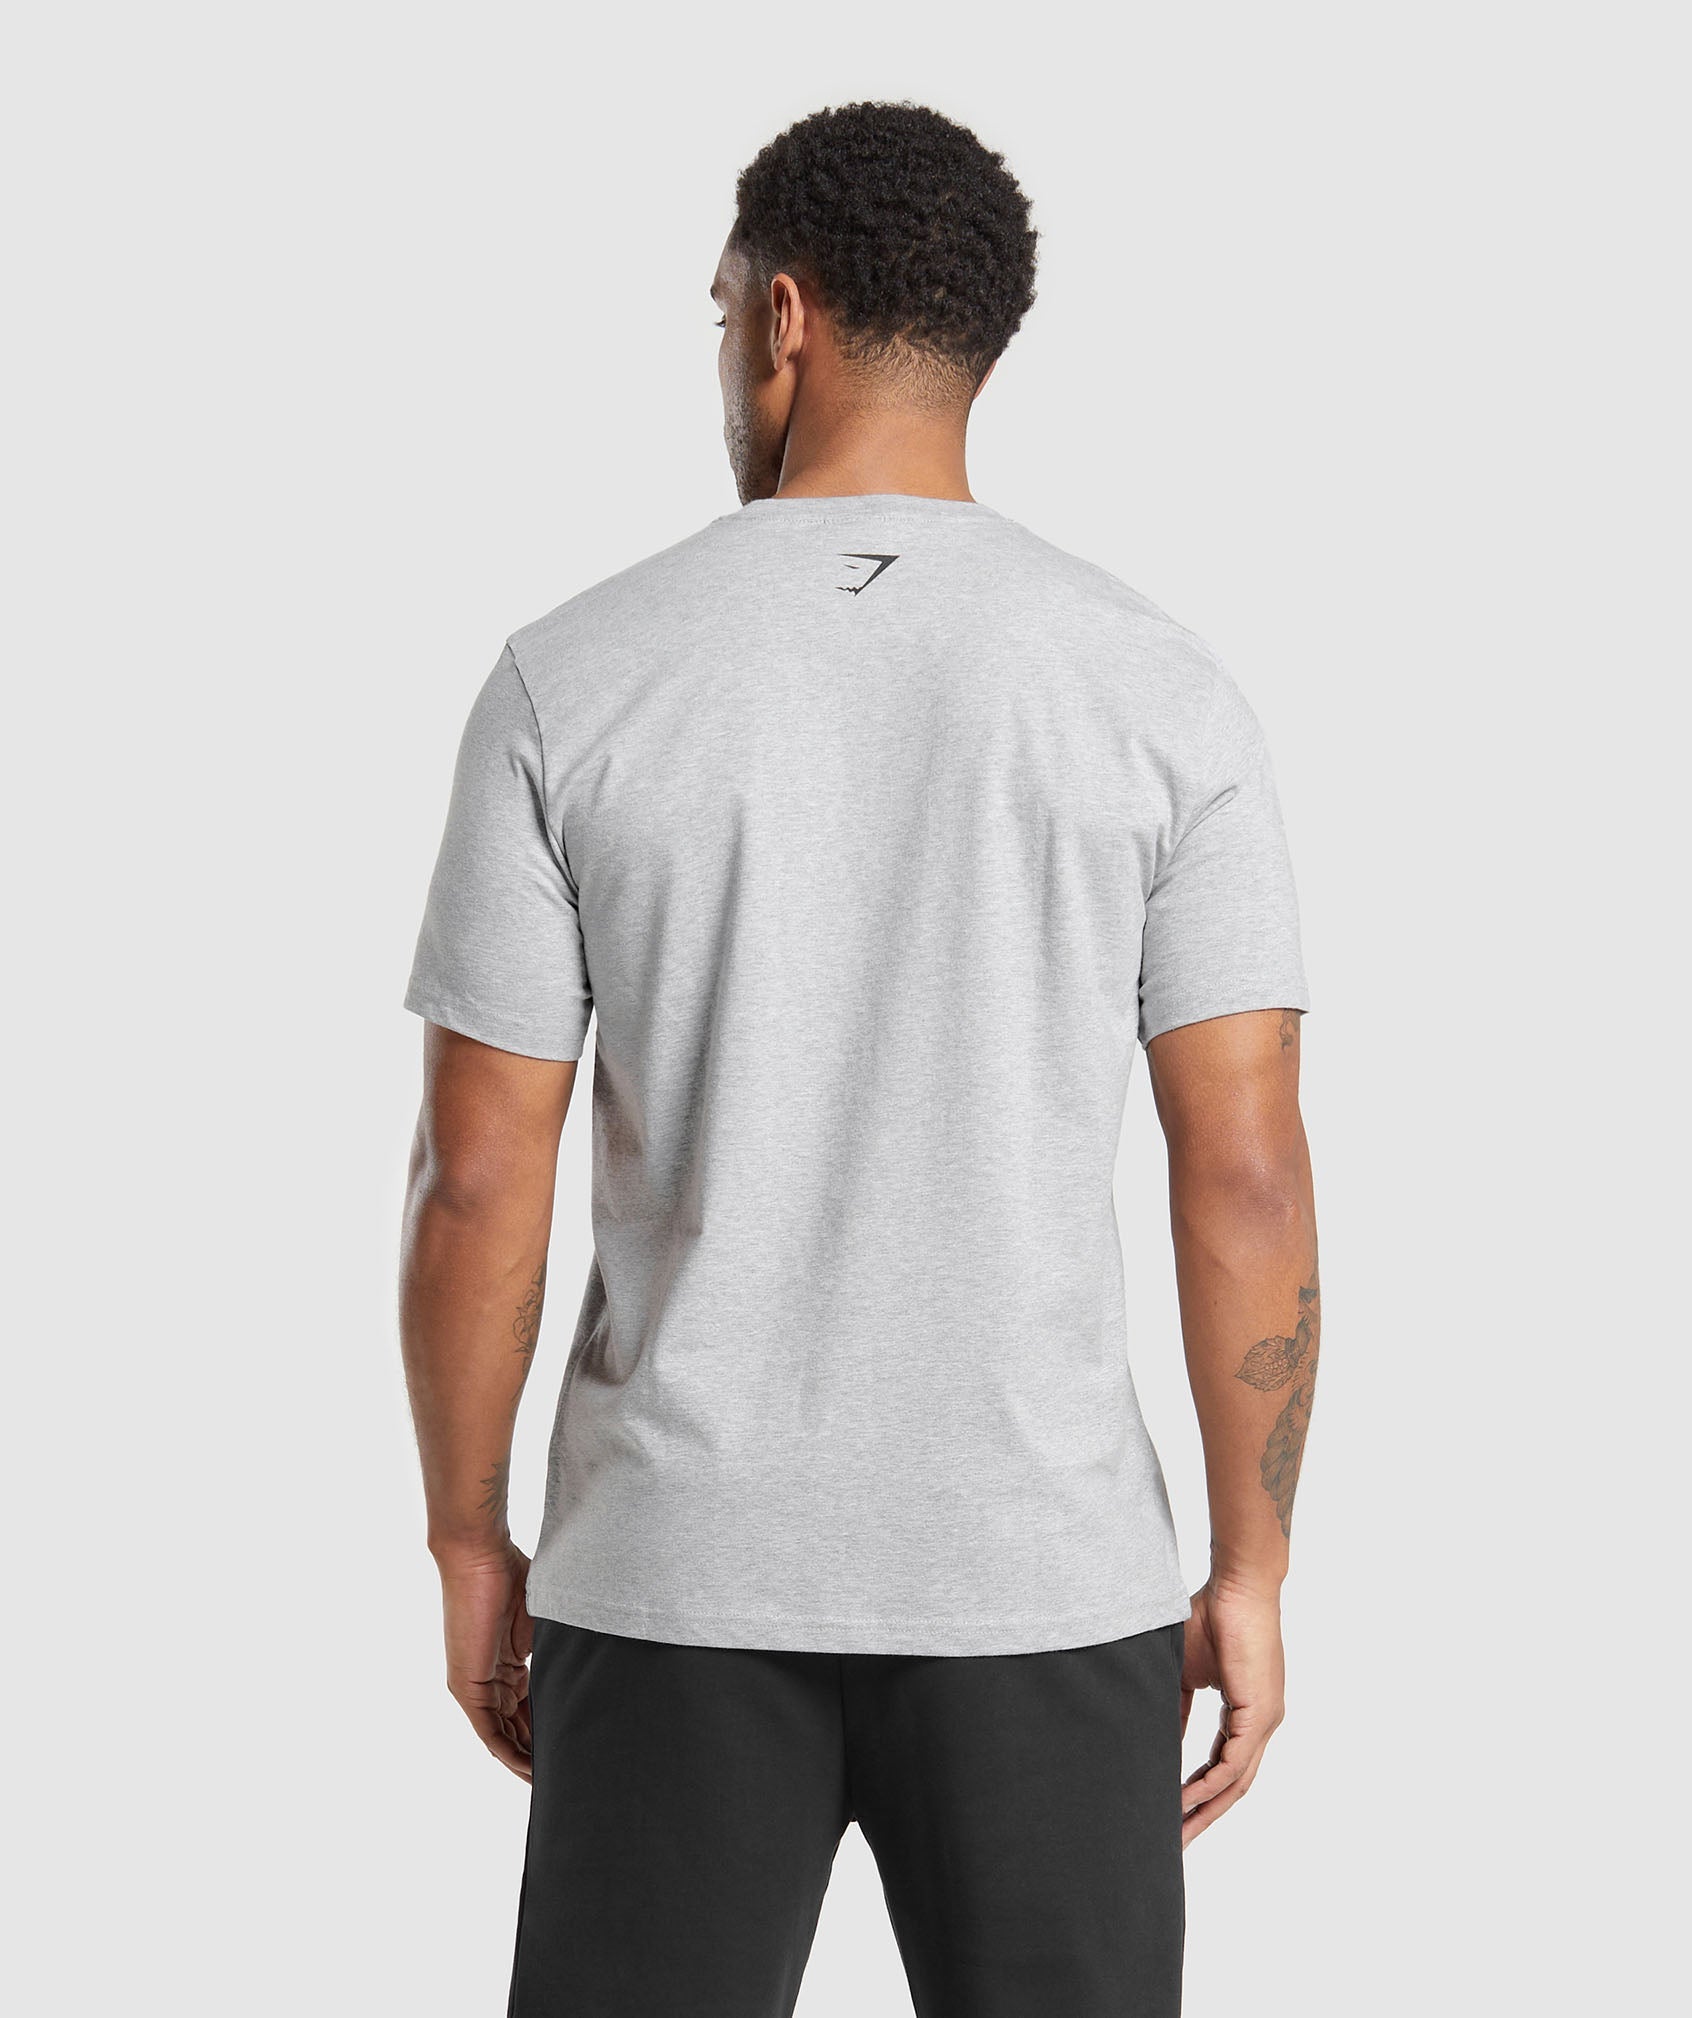 Lifting Club T-Shirt in Light Grey Core Marl - view 2